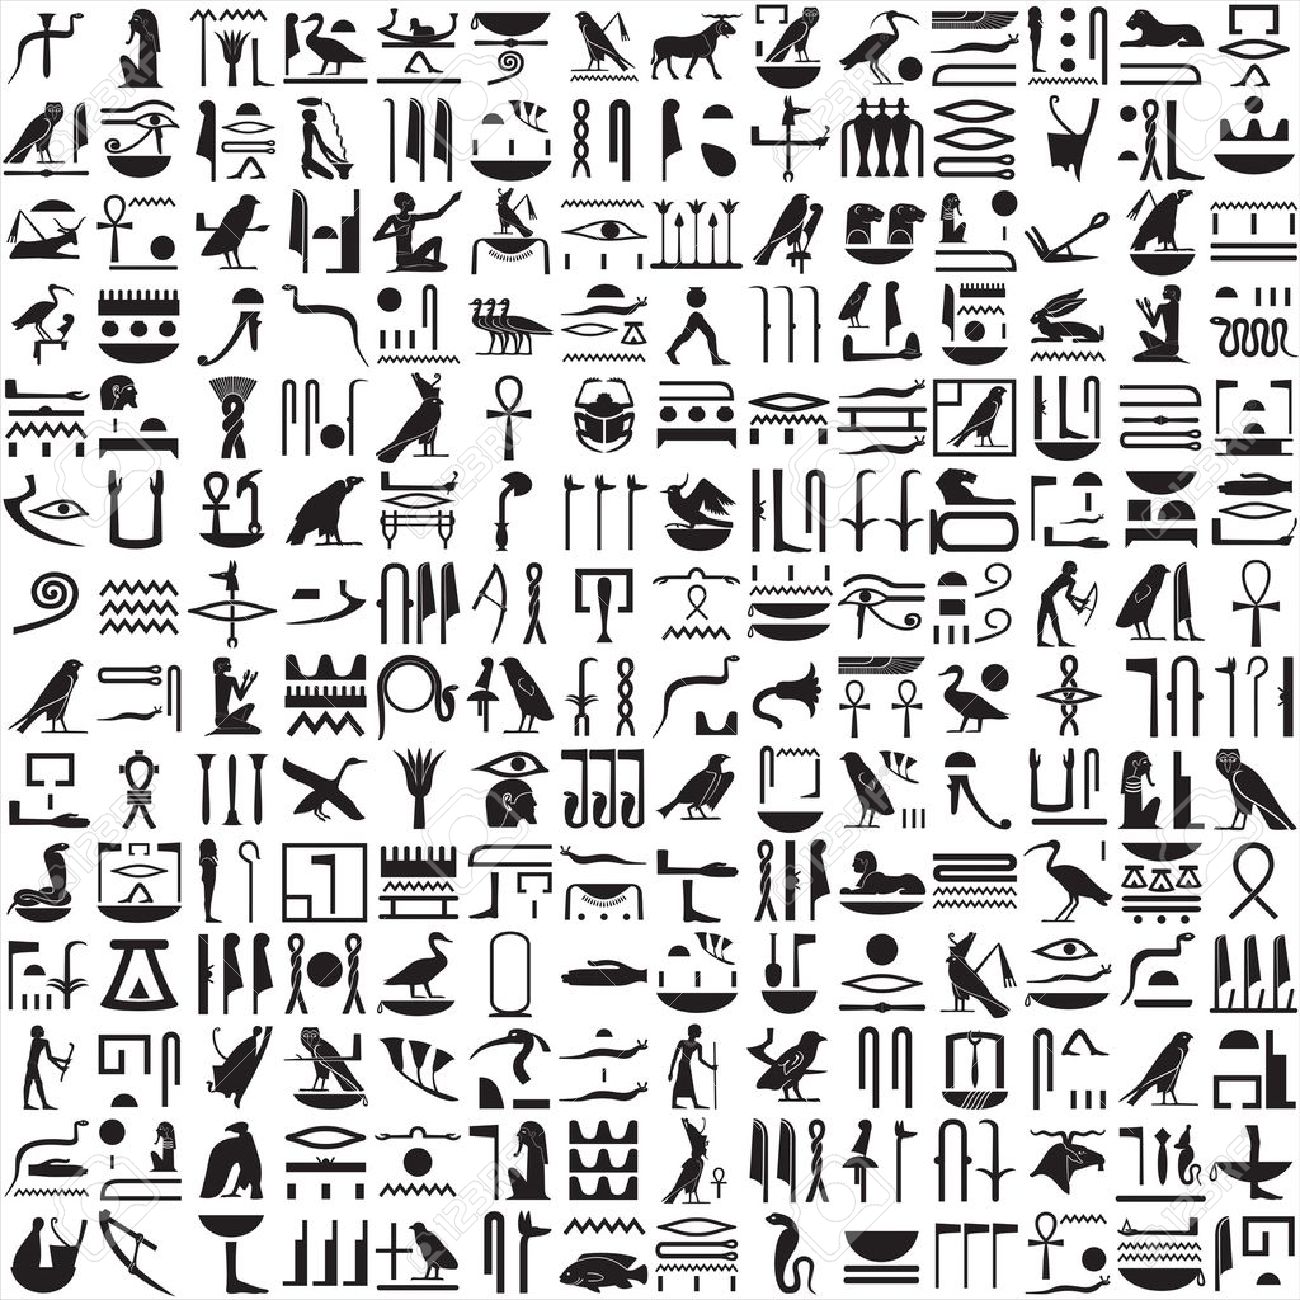 How Many Hieroglyphic Symbols Are There